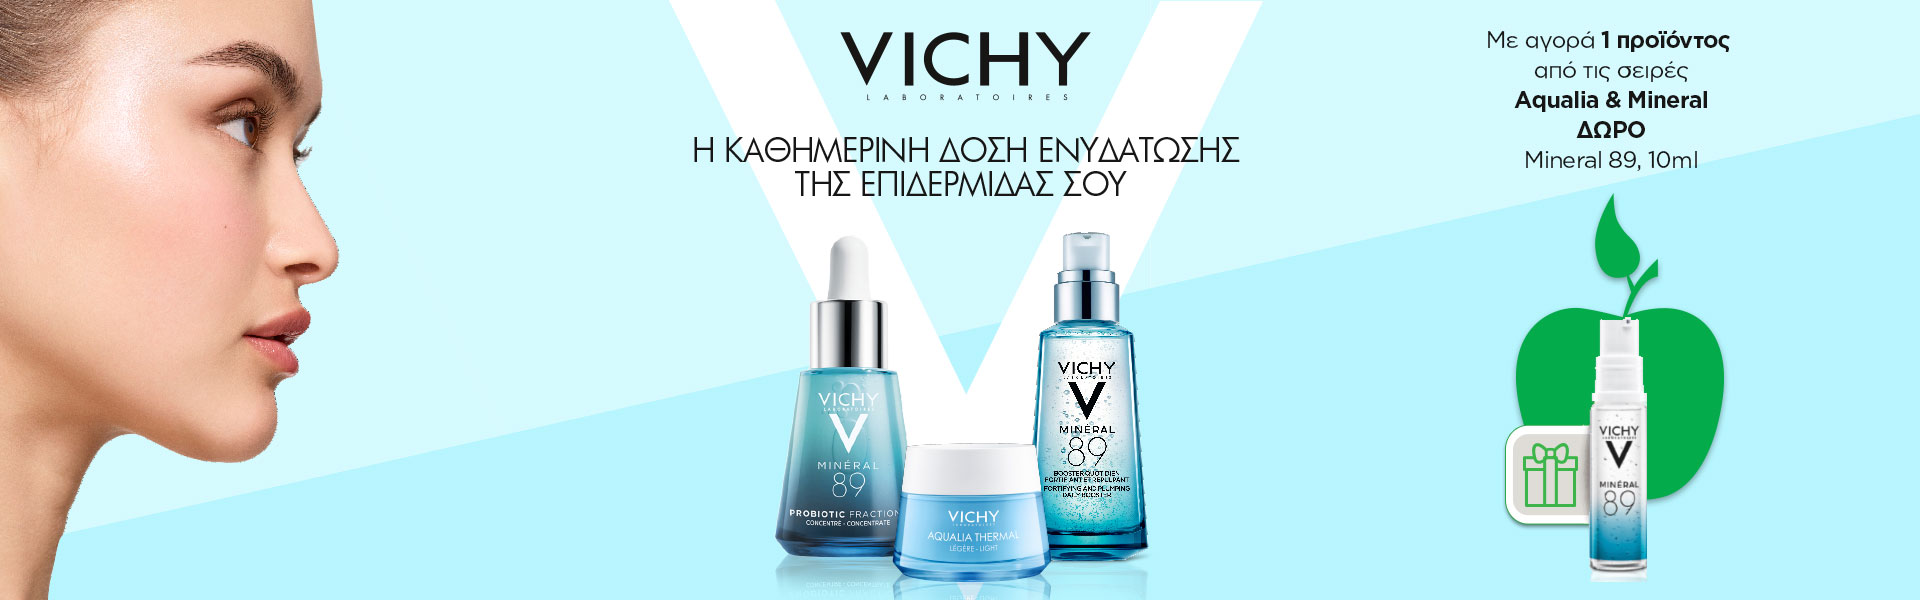 Vichy Aqualia & Mineral 89